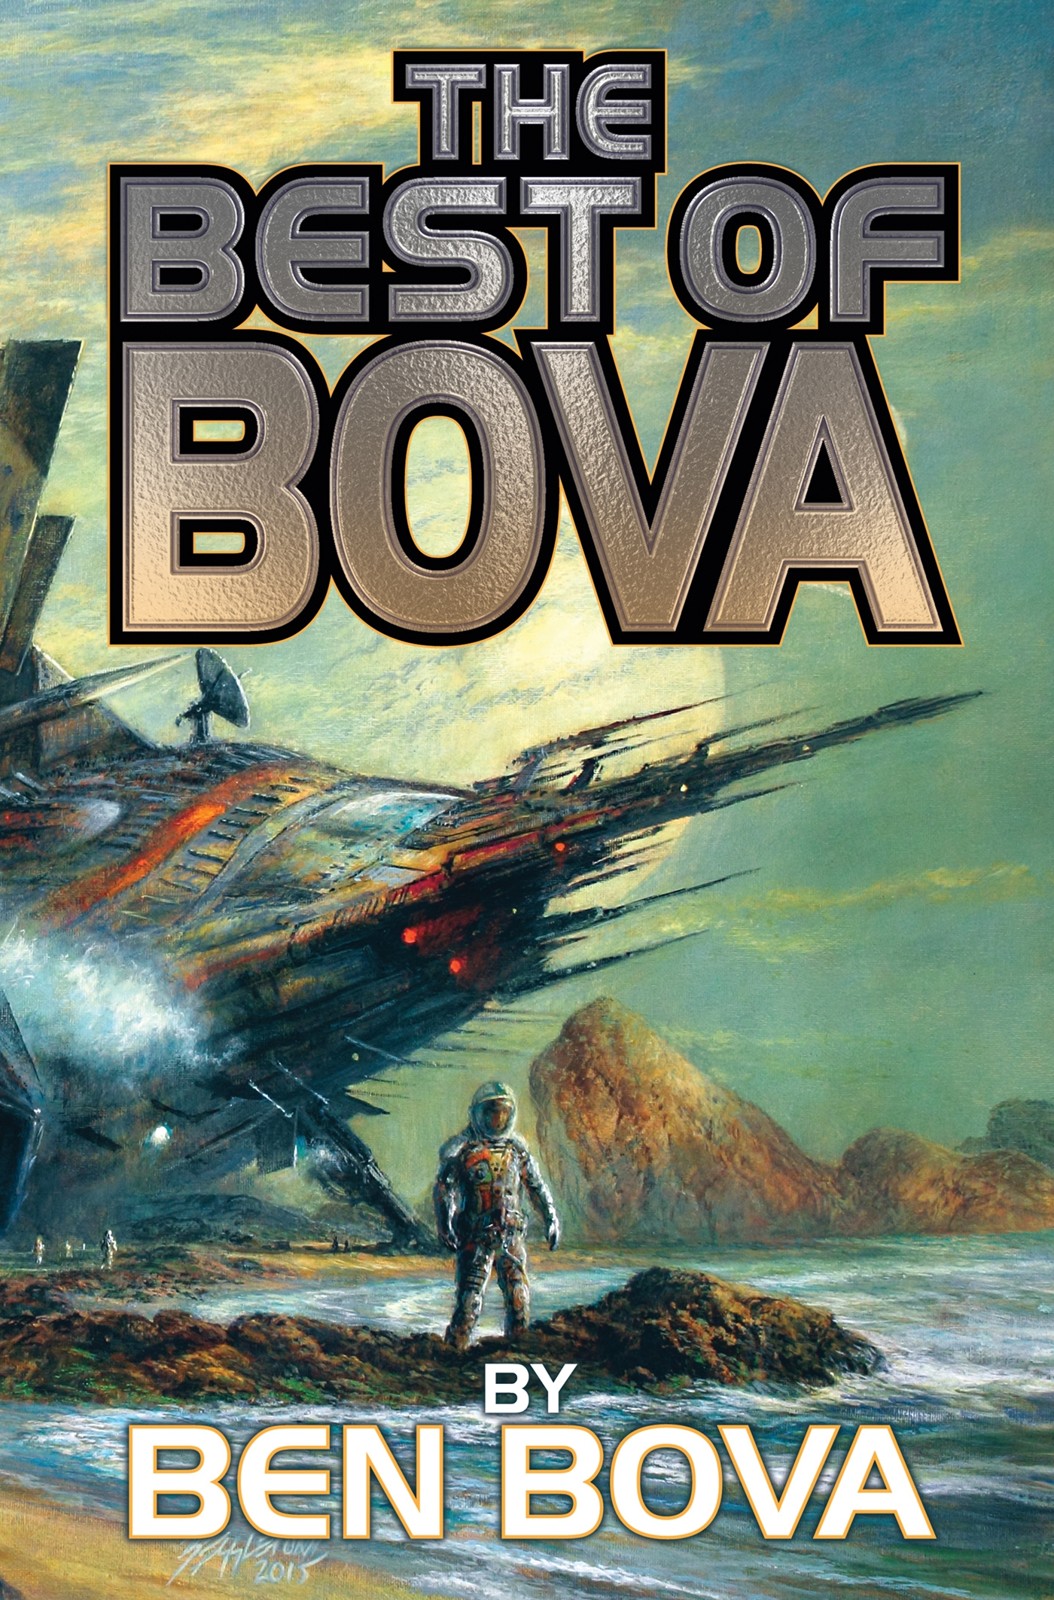 The Best of Bova: Volume 1 by Ben Bova